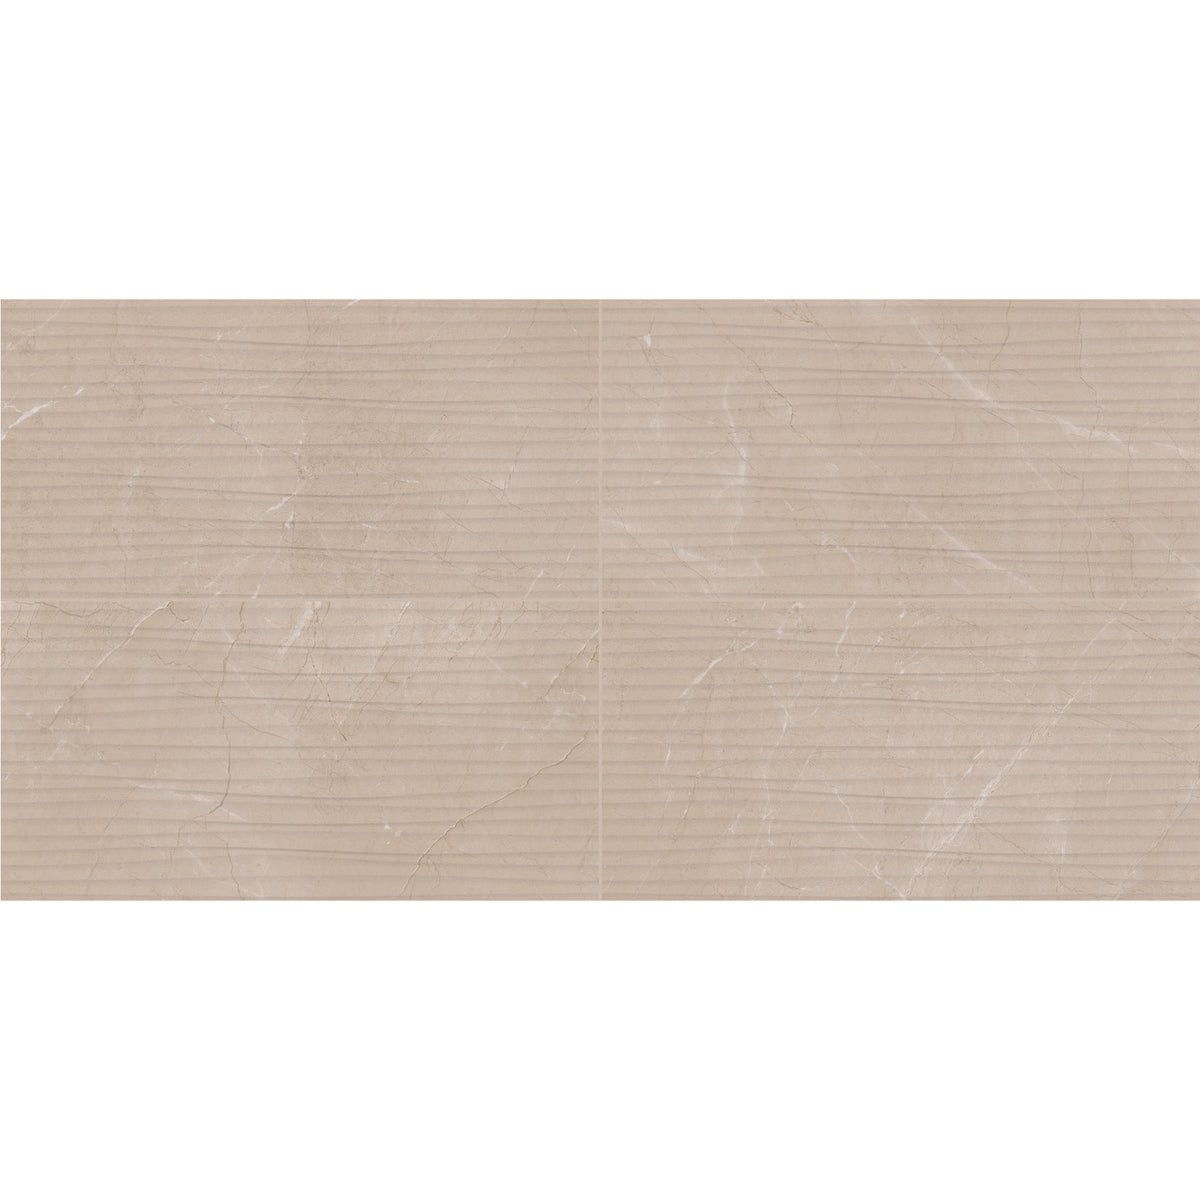 Daltile - Perpetuo - 12 in. x 24 in. Glazed Ceramic Wave Wall Tile - Elegant Beige 3